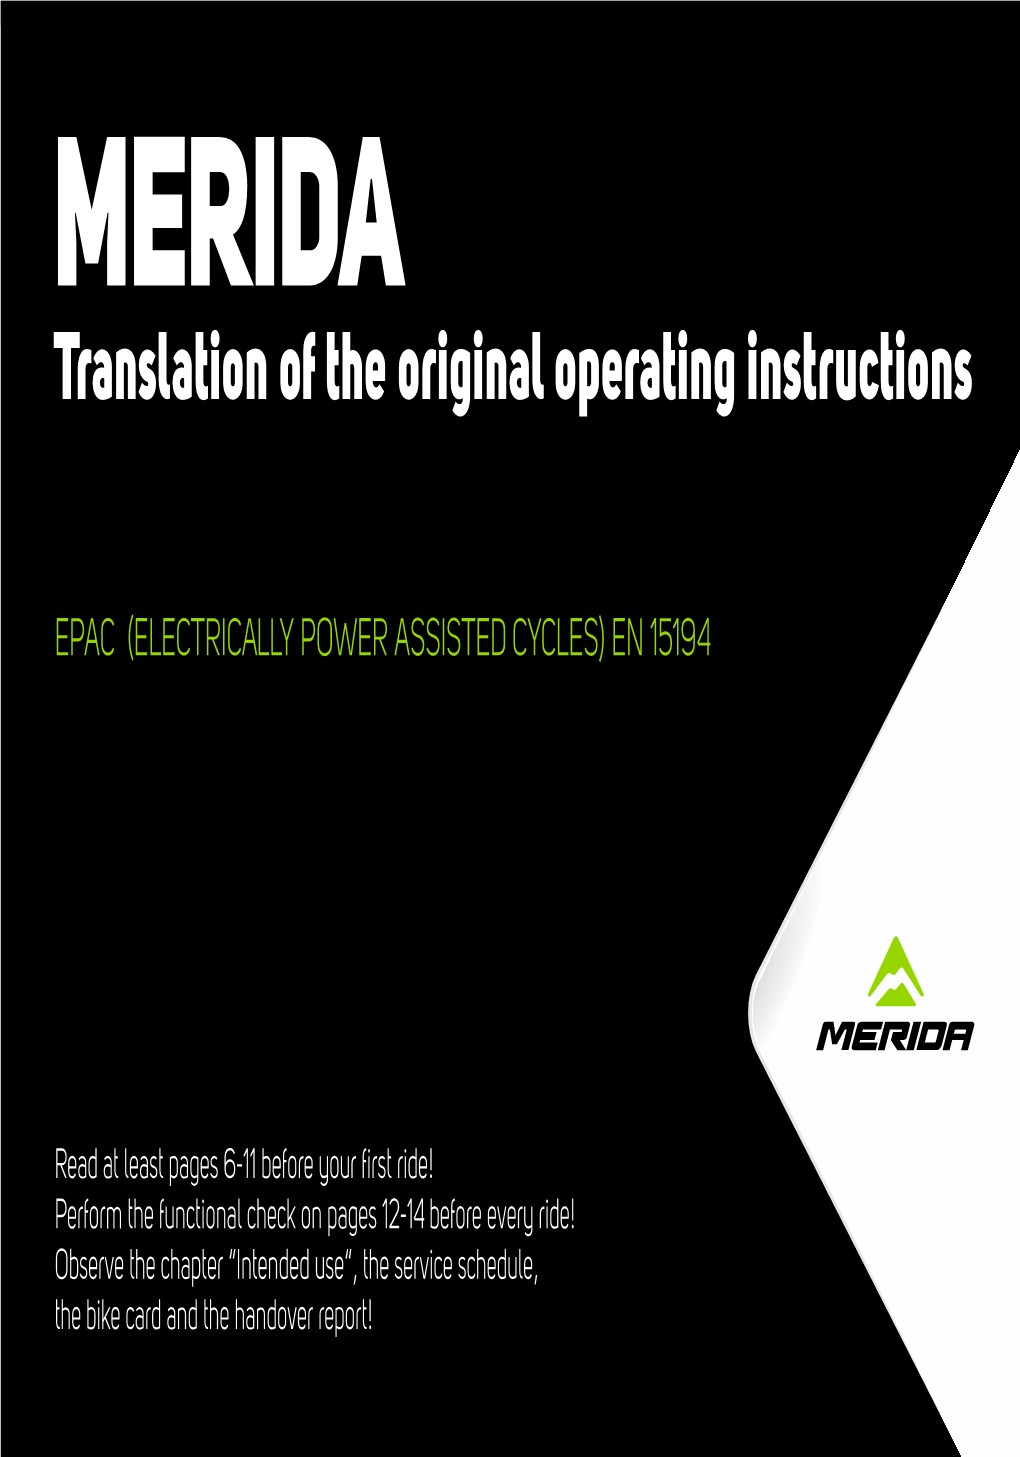 MERIDA Translation of the Original Operating Instructions